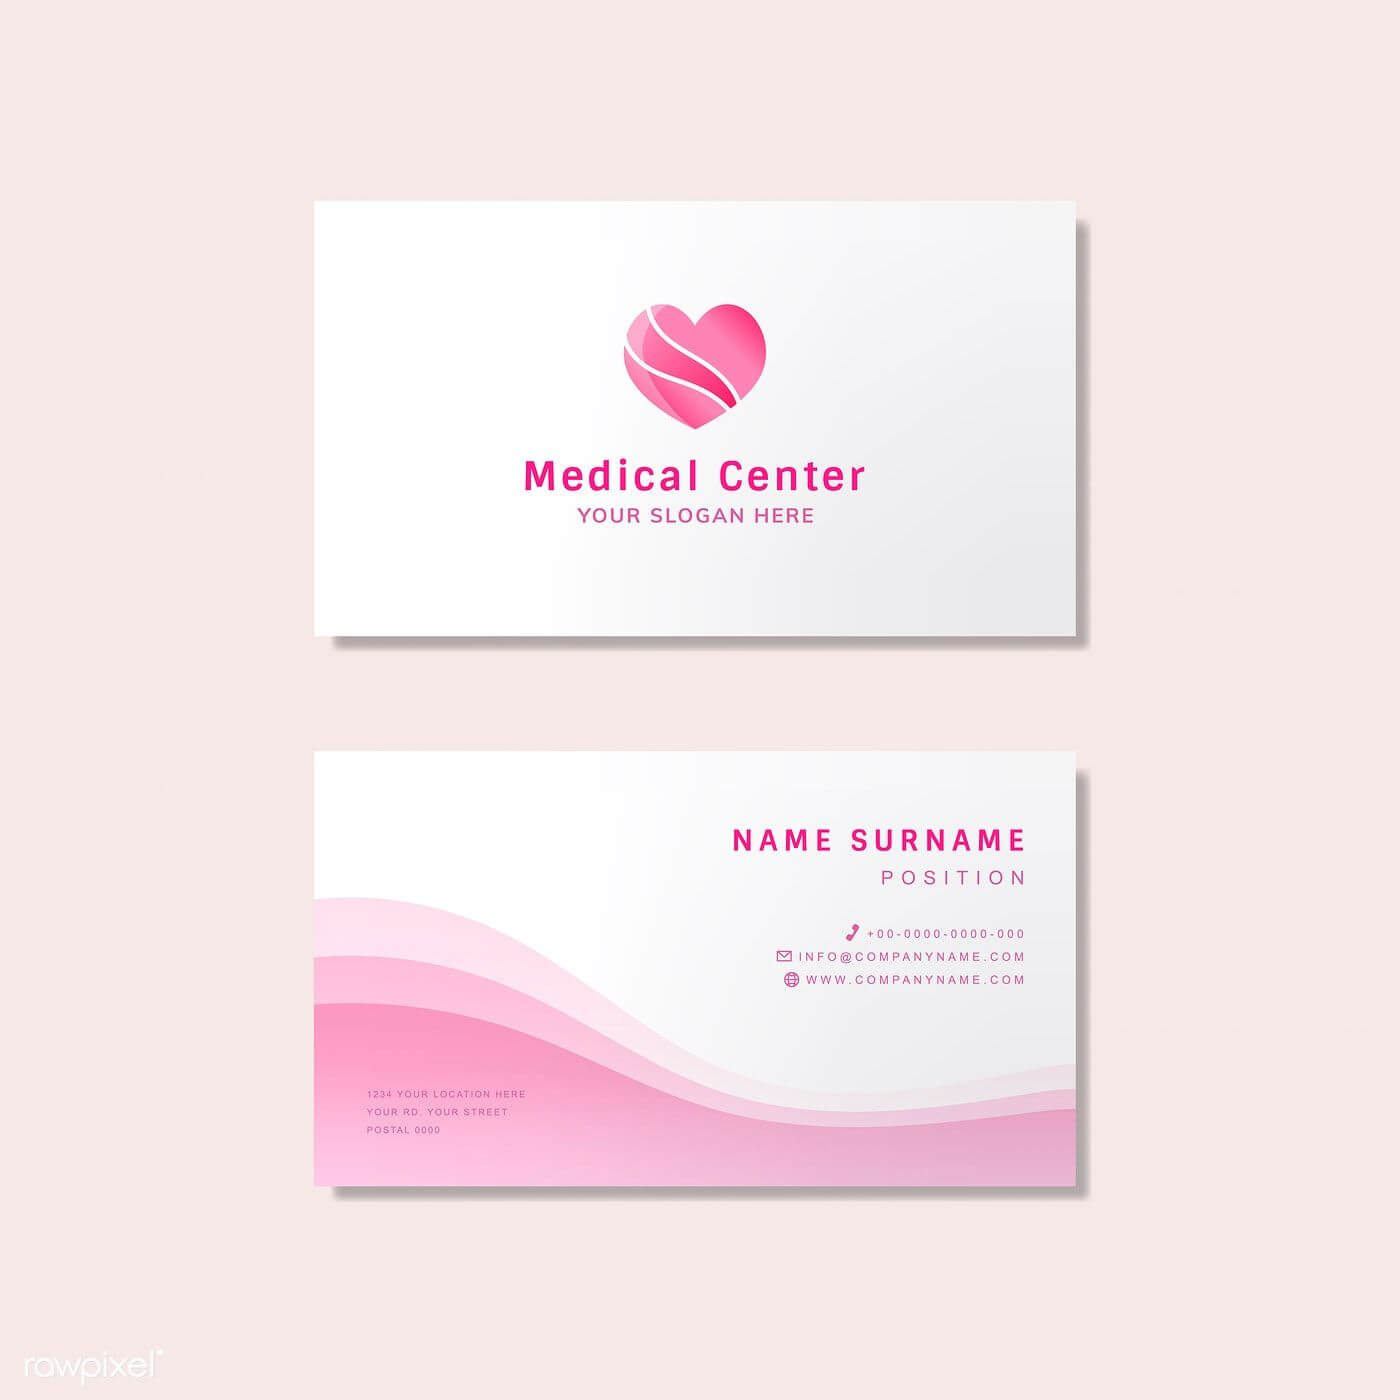 Medical Professional Business Card Design Mockup | Free With Medical Business Cards Templates Free